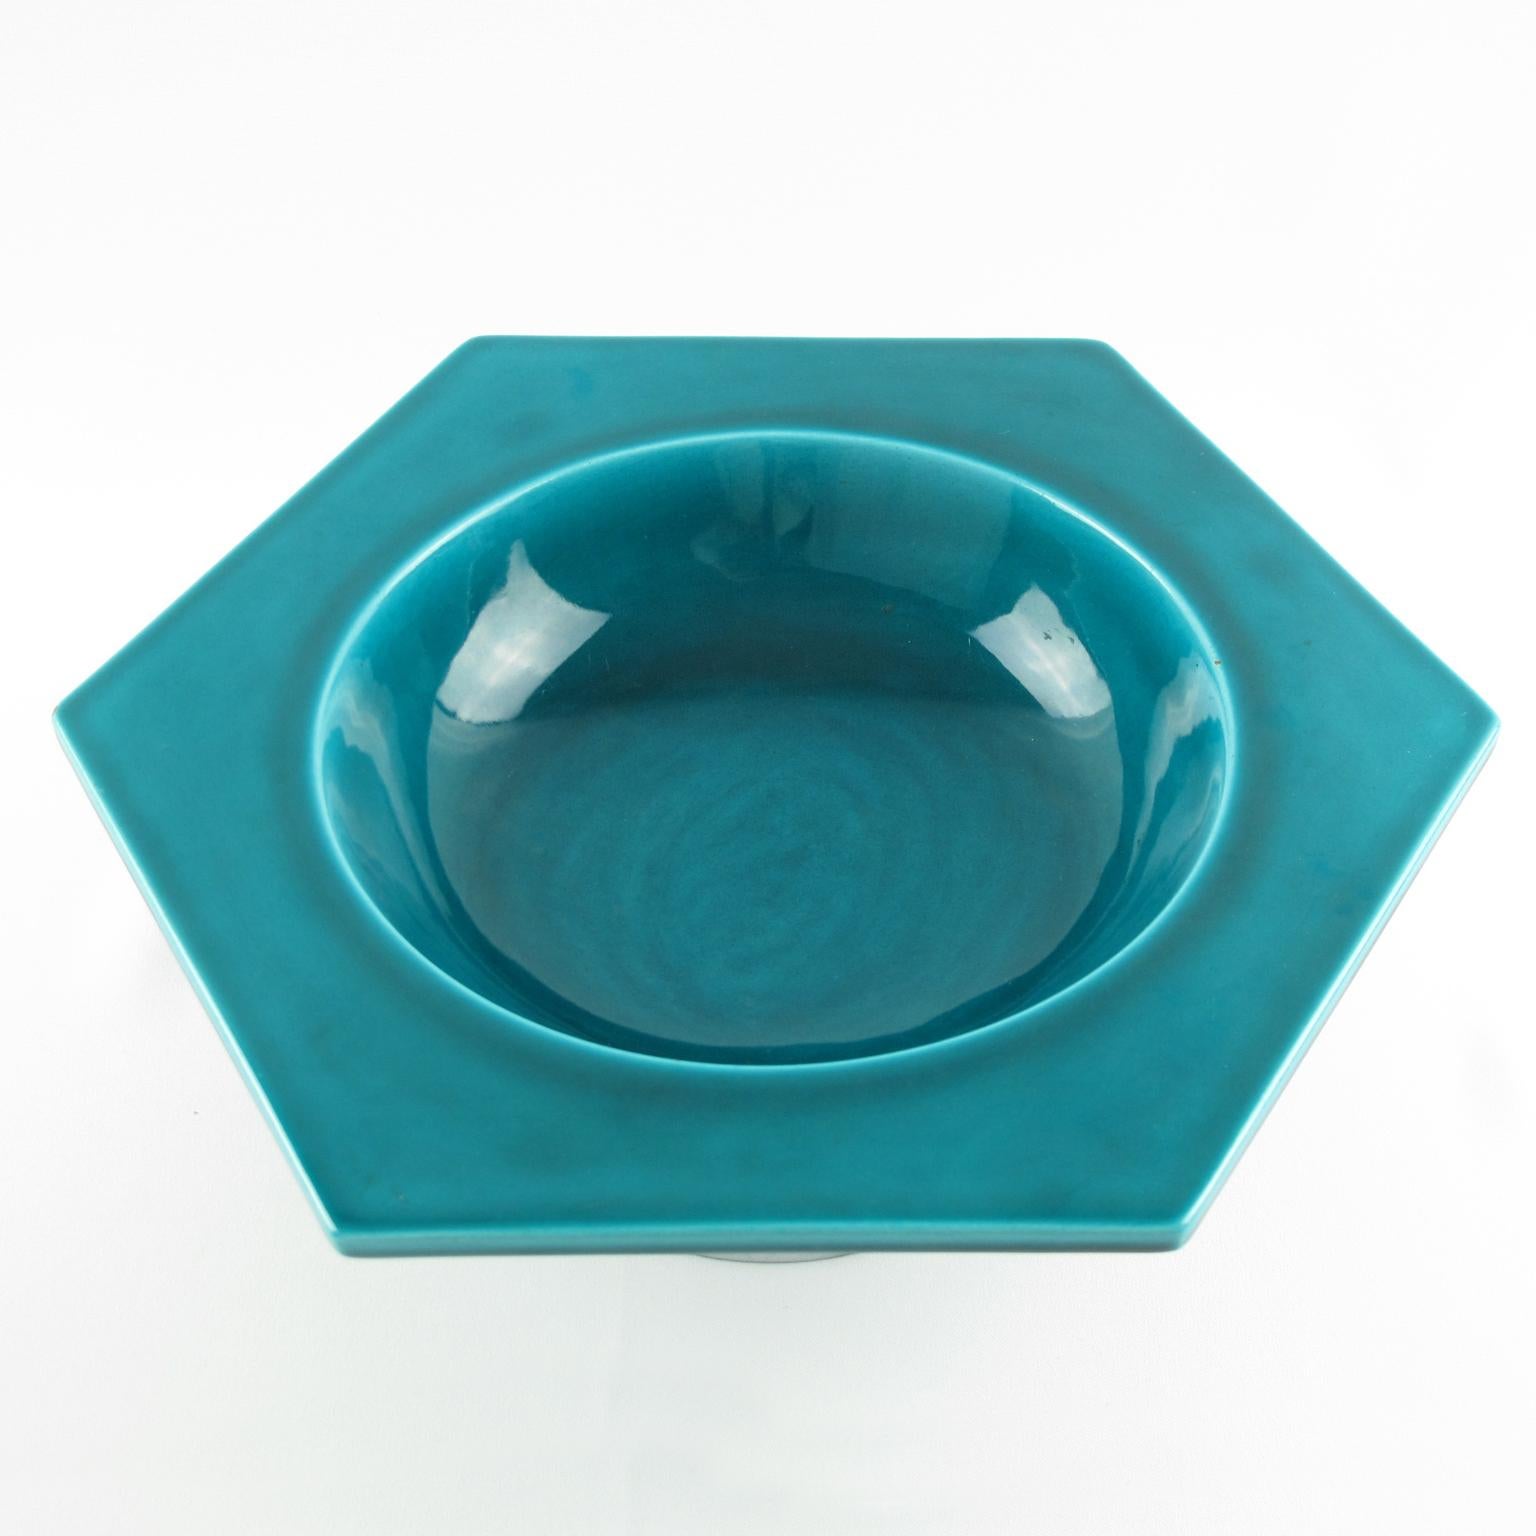 Mid-20th Century Paul Milet for Sevres Art Deco Bronze and Turquoise Ceramic Centerpiece Bowl